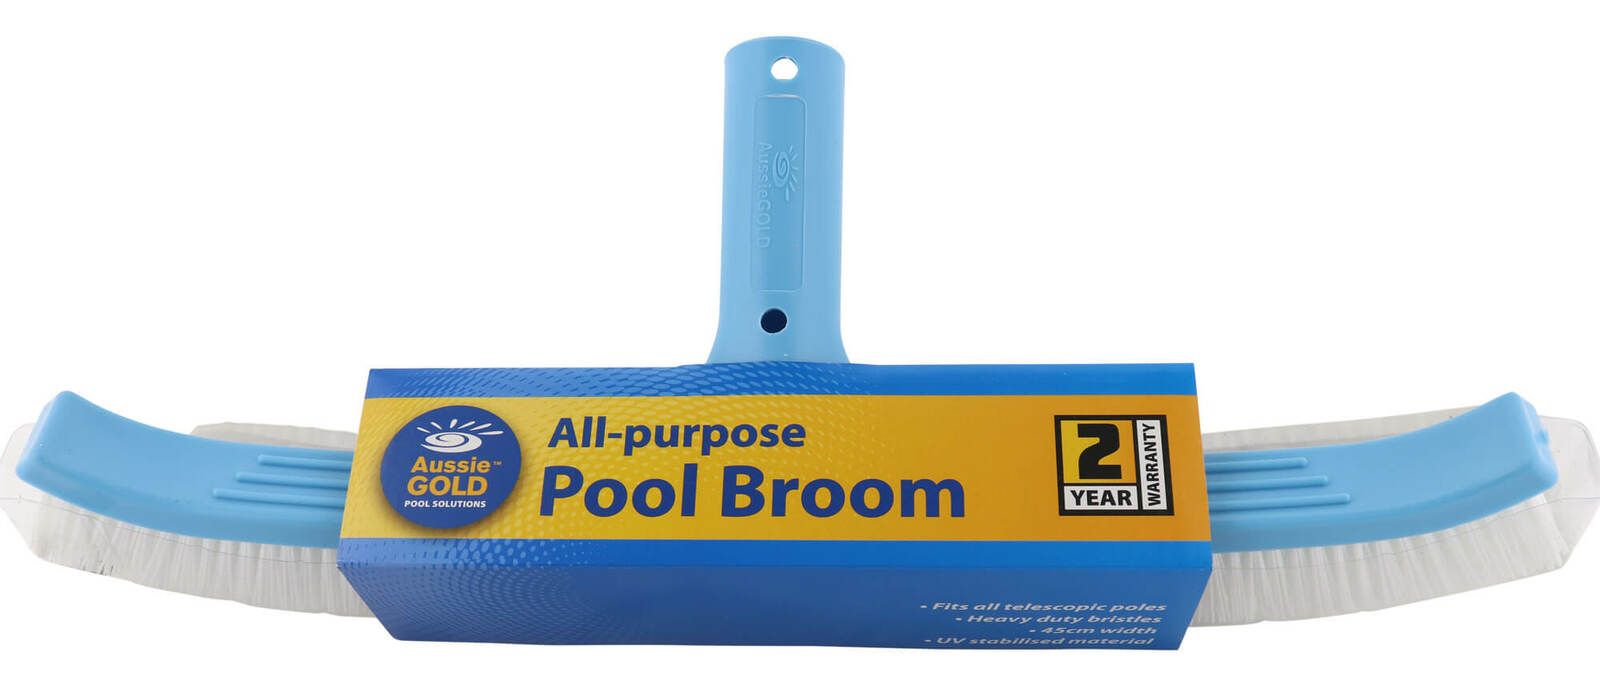 Pool Brush Aussie Gold 45cm Curved Pool Wall Brush Broom - 2 Year Warranty